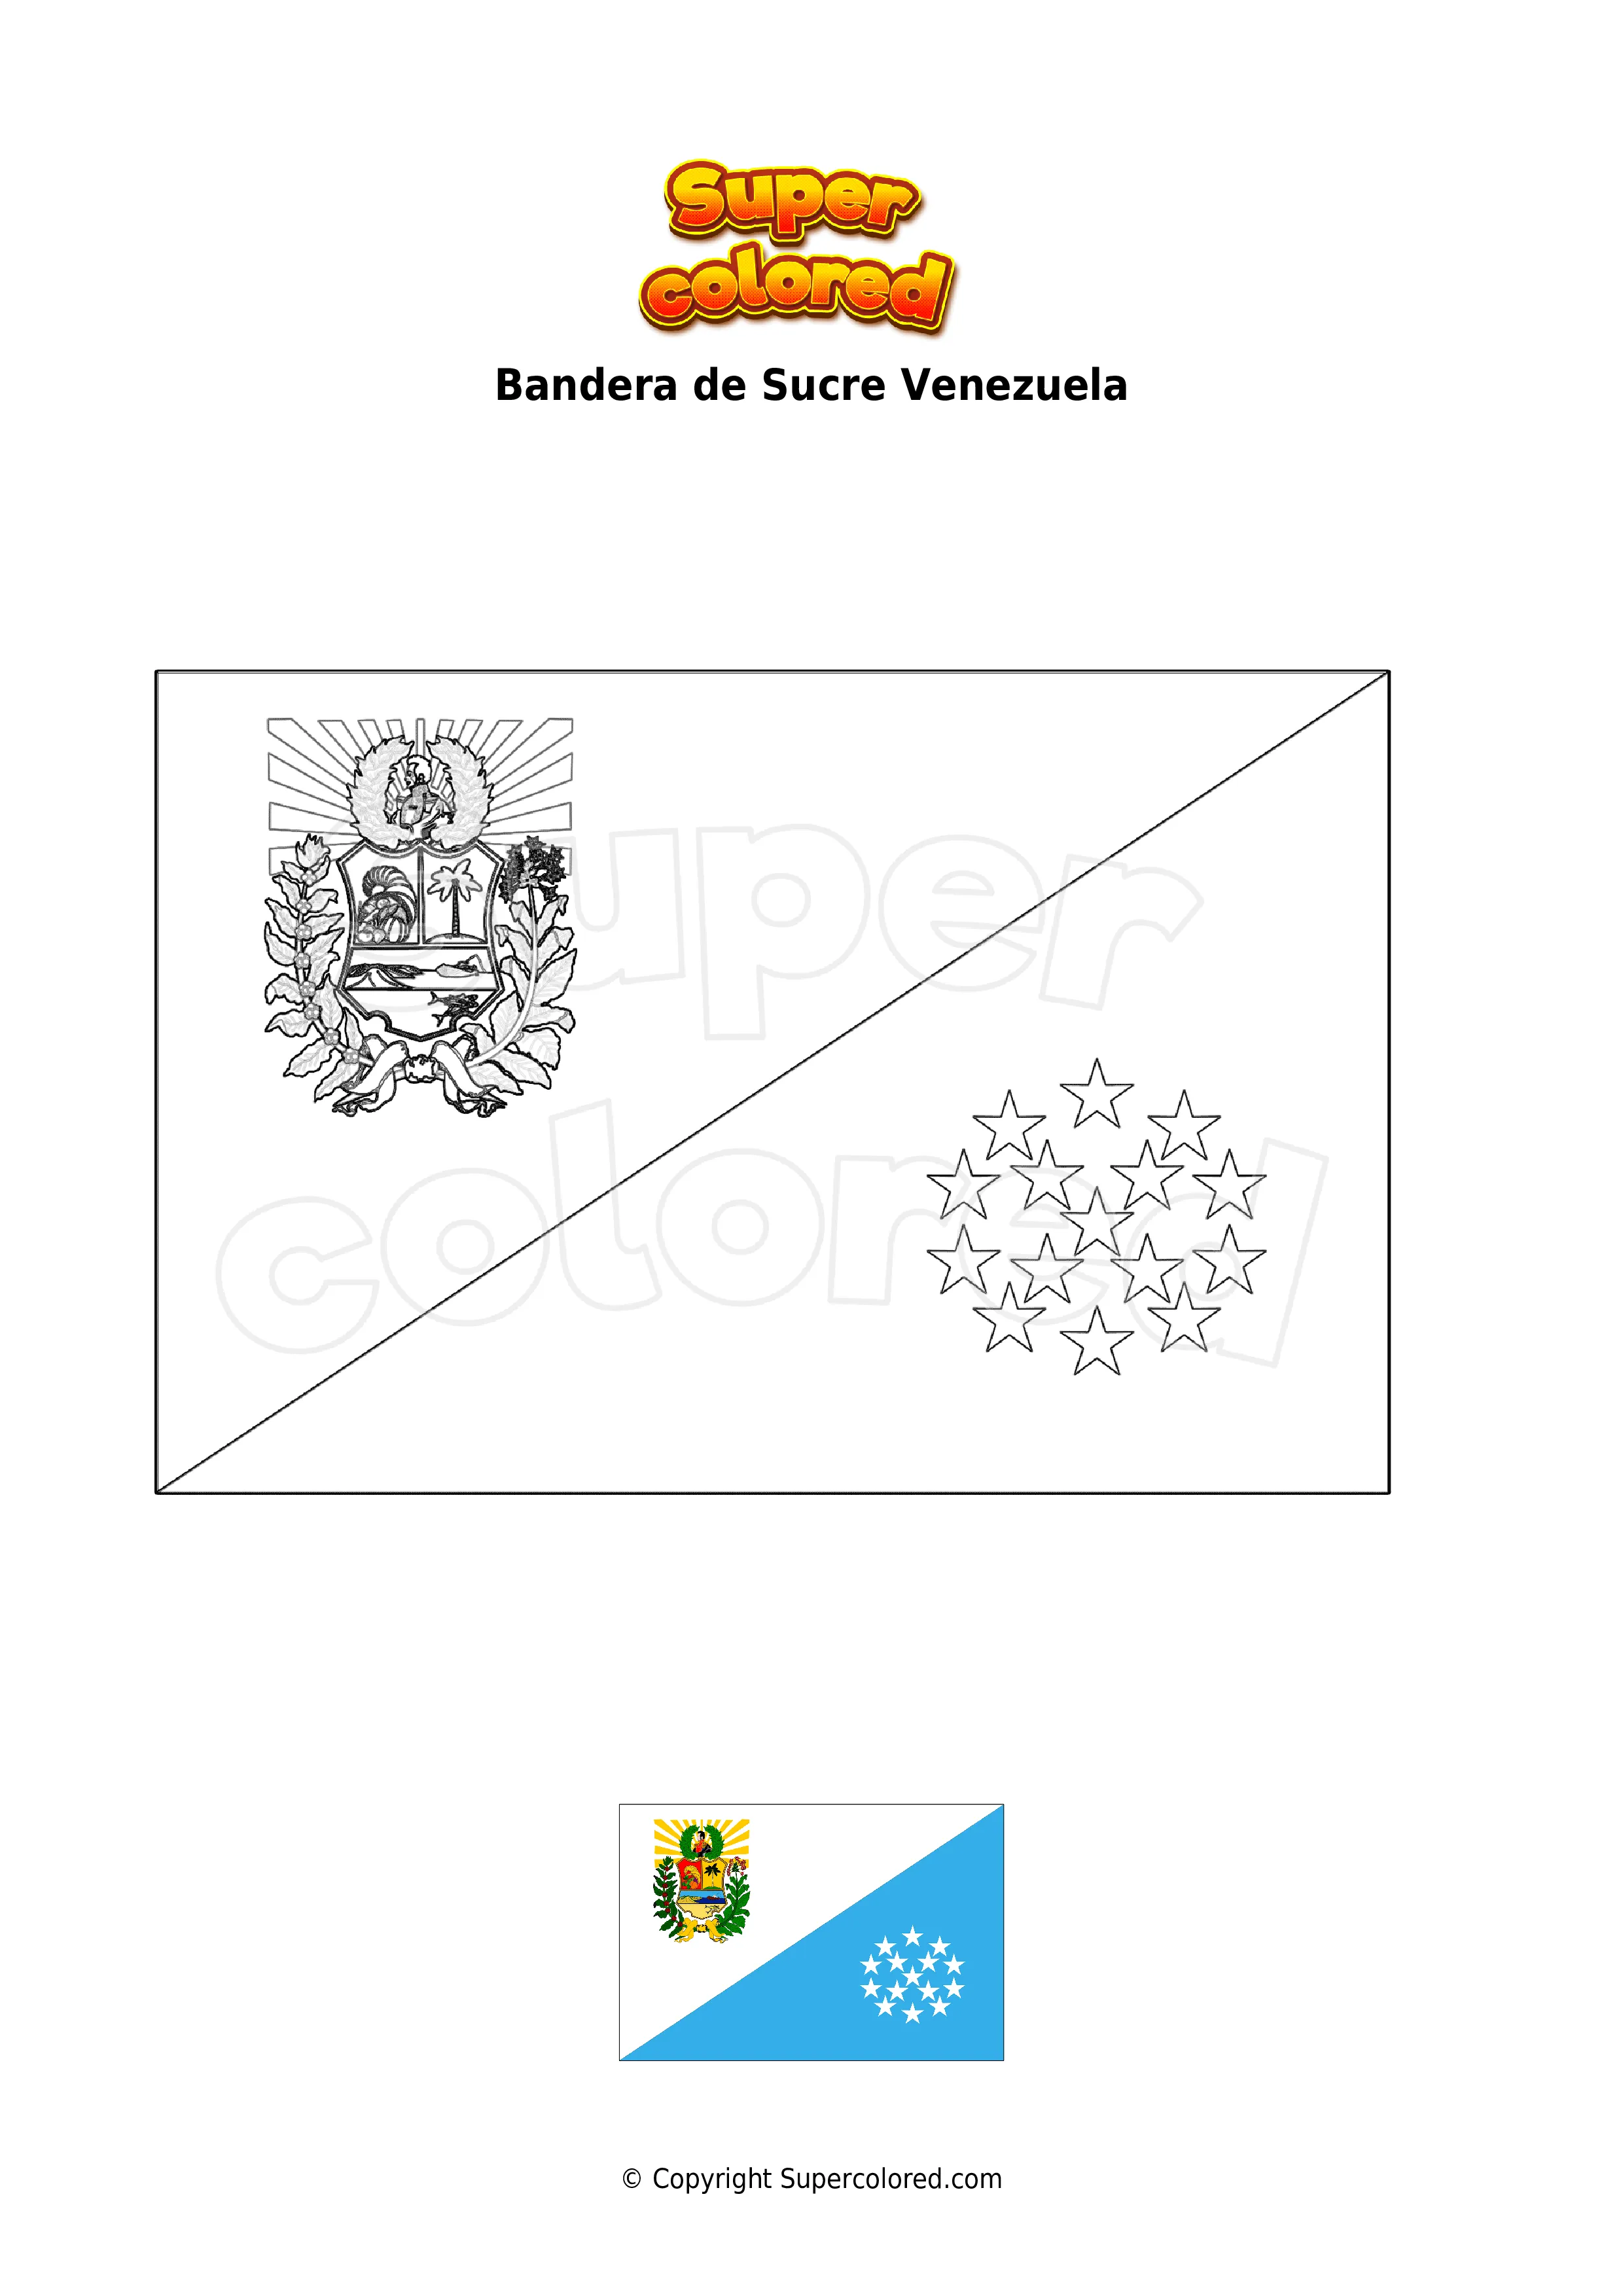 Dibujo para colorear Bandera de Sucre Venezuela - Supercolored.com